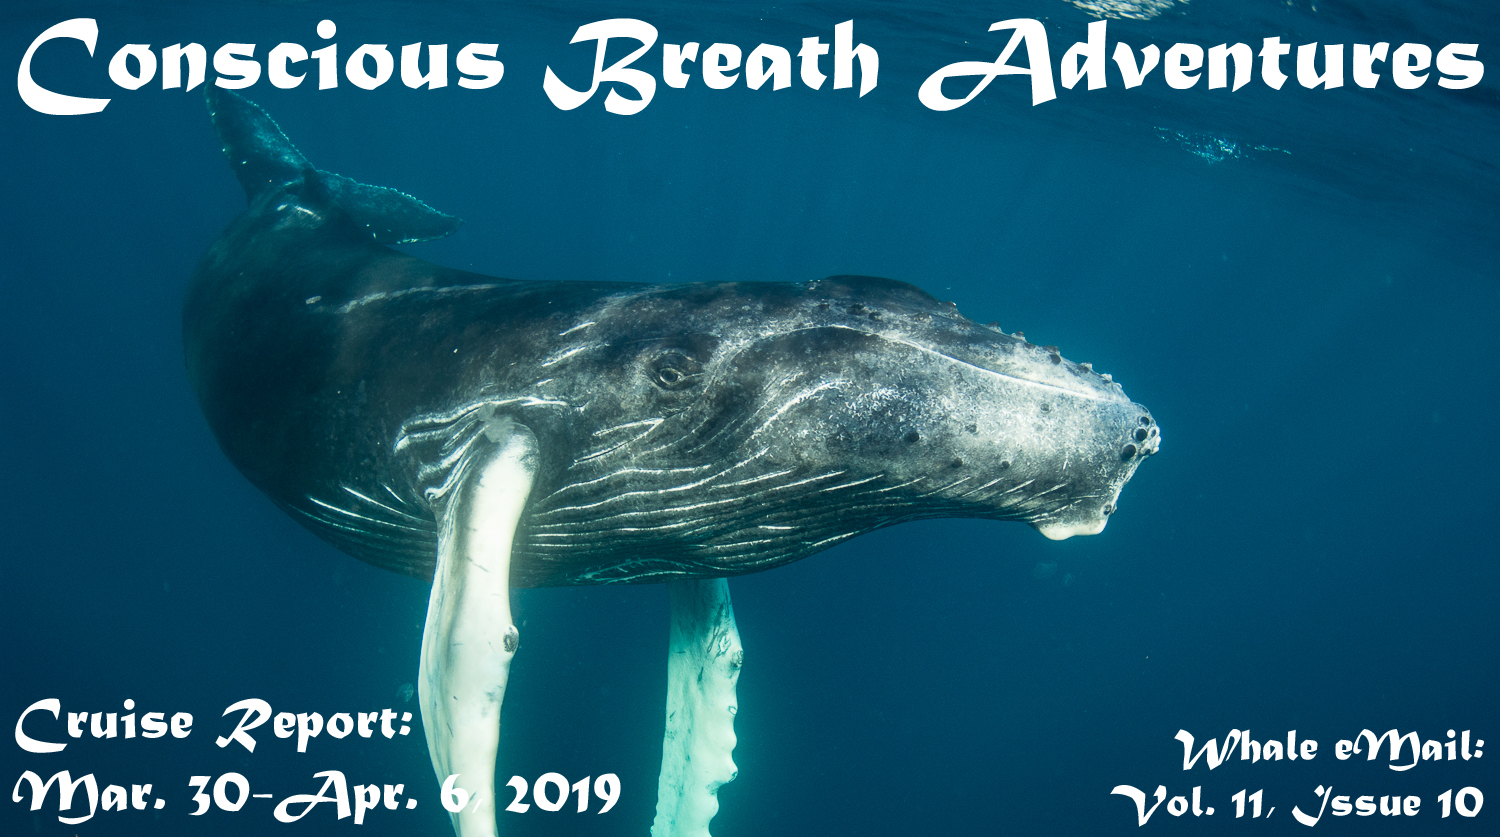 Cruise Report, Week 10: Mar. 31-Apr. 6, 2019